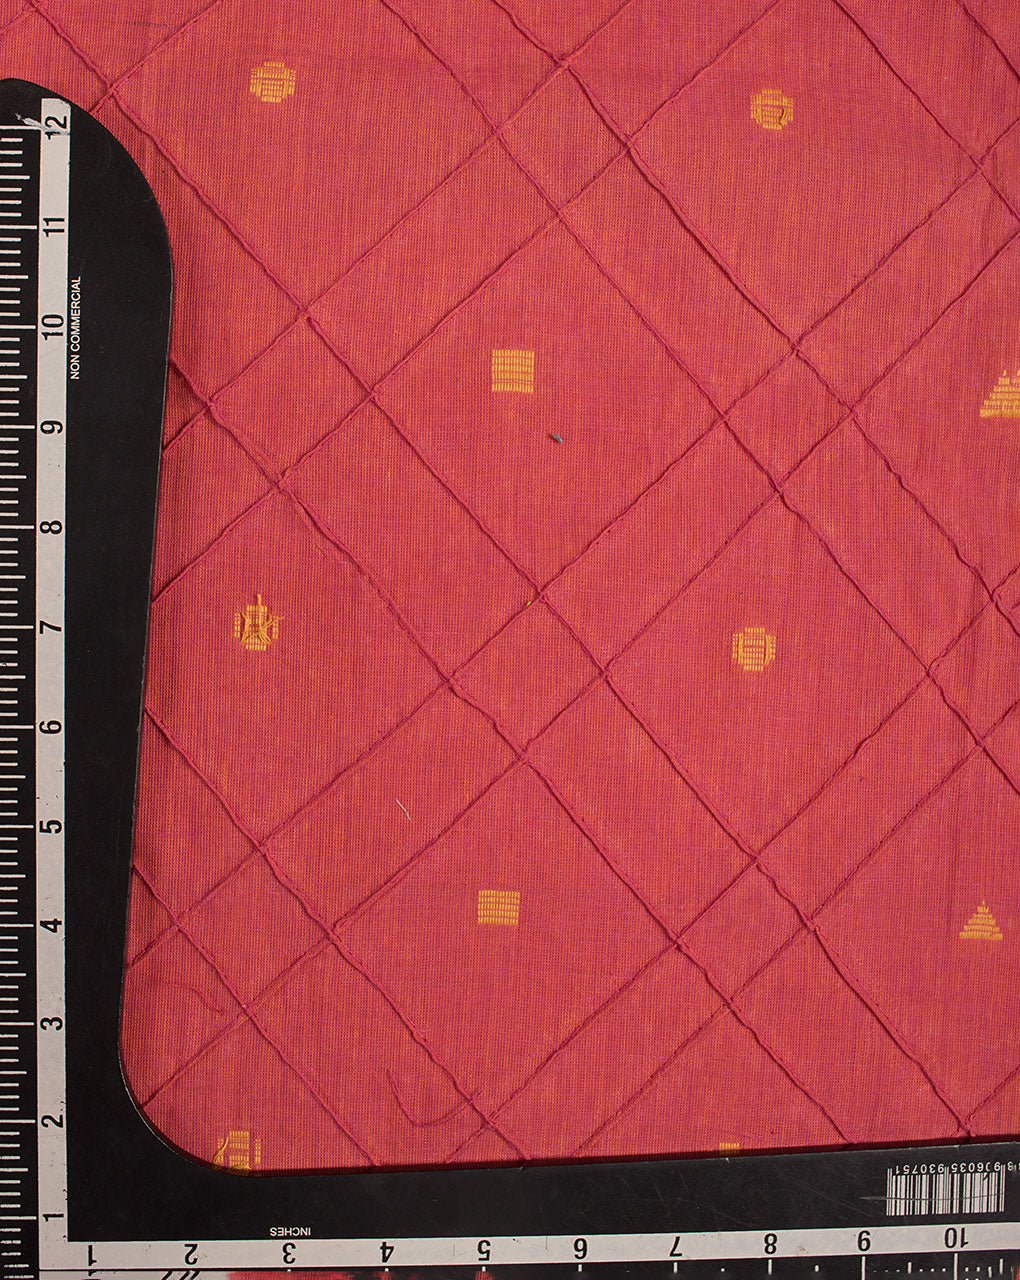 ( Pre Cut 1 MTR ) Pin-Tucks Loom Textured Cotton Fabric